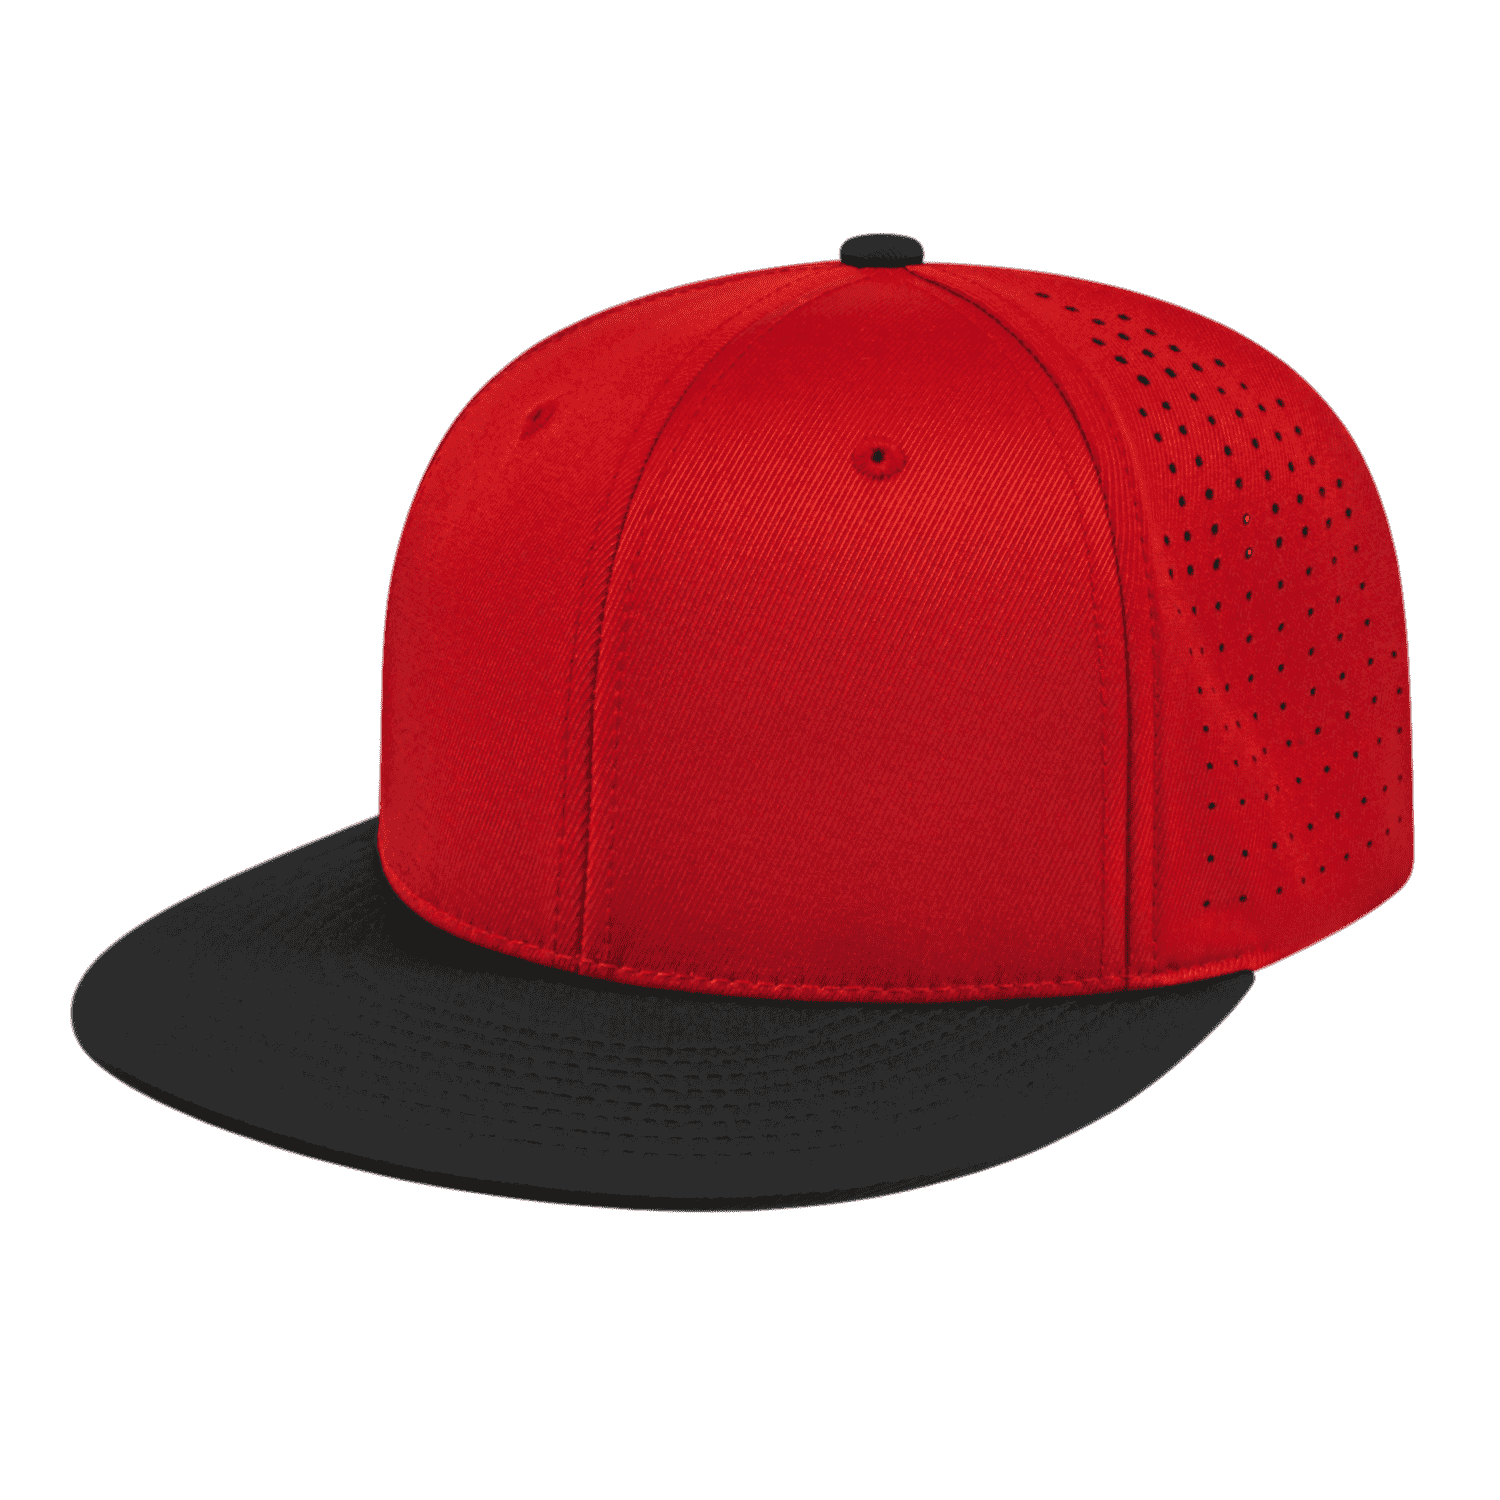 Cap America Flexfit - Black Performance Perforated Cap Red i8503